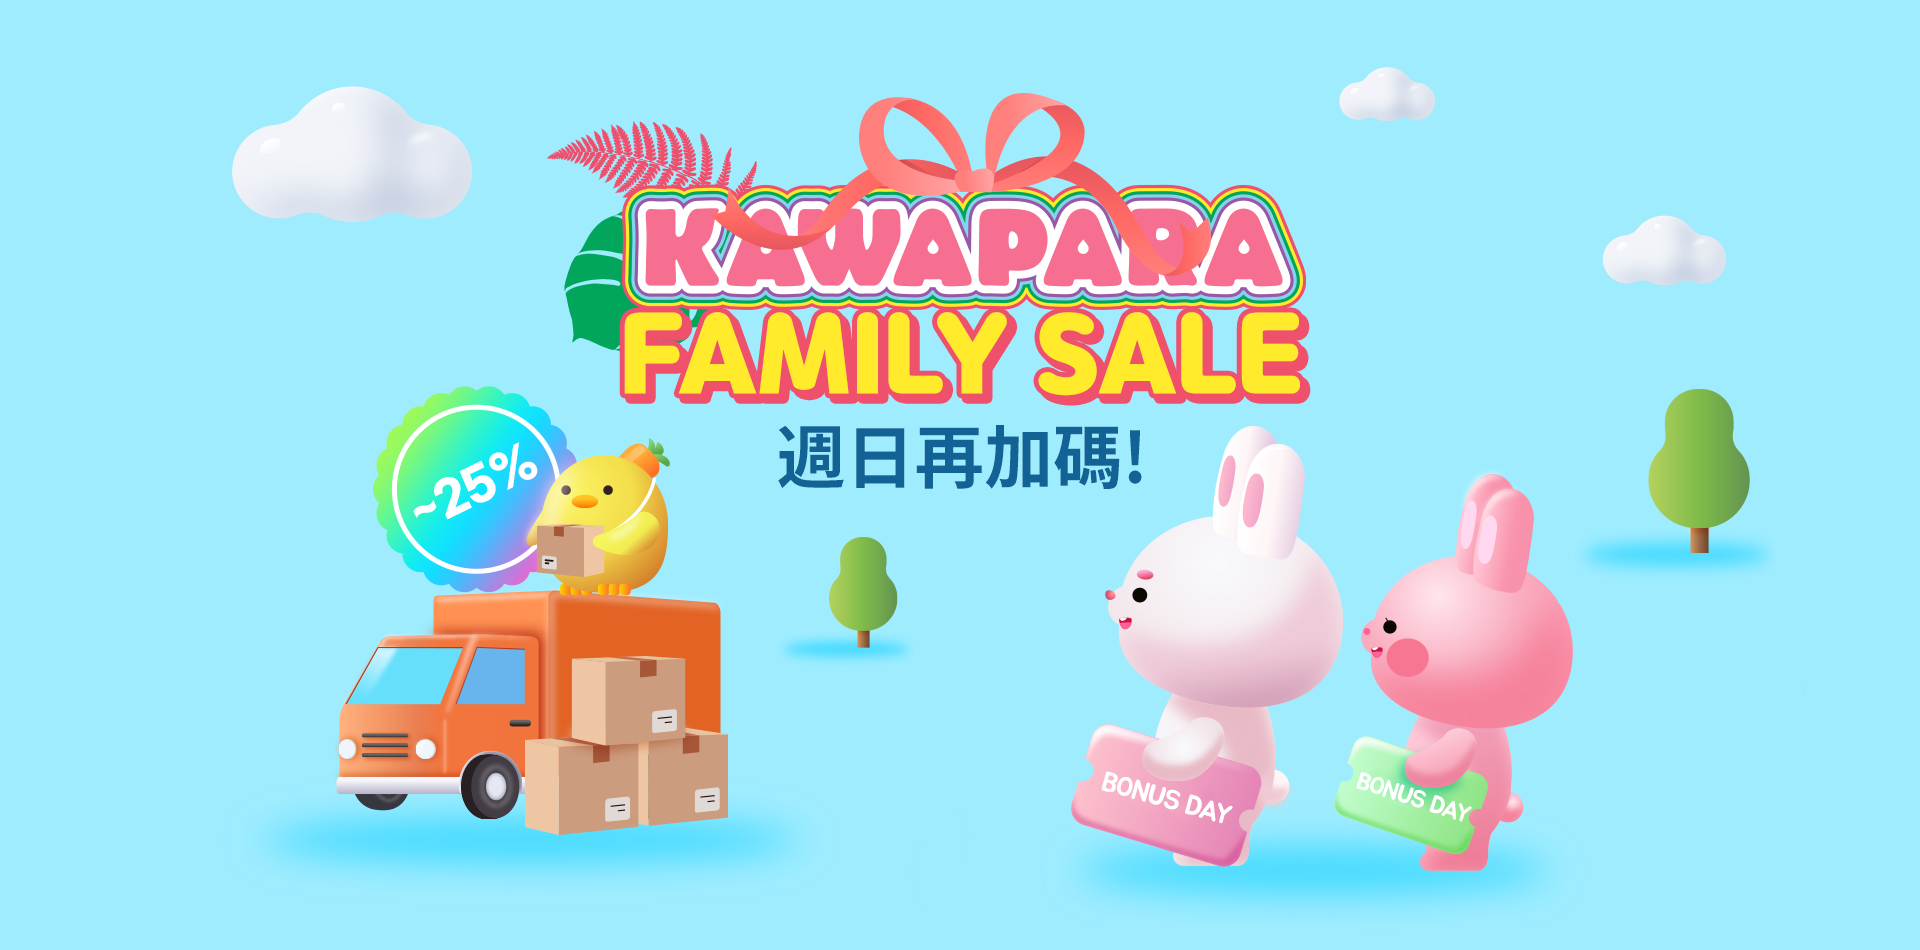 kawapara family sale! up to 25% / 週日再加碼!